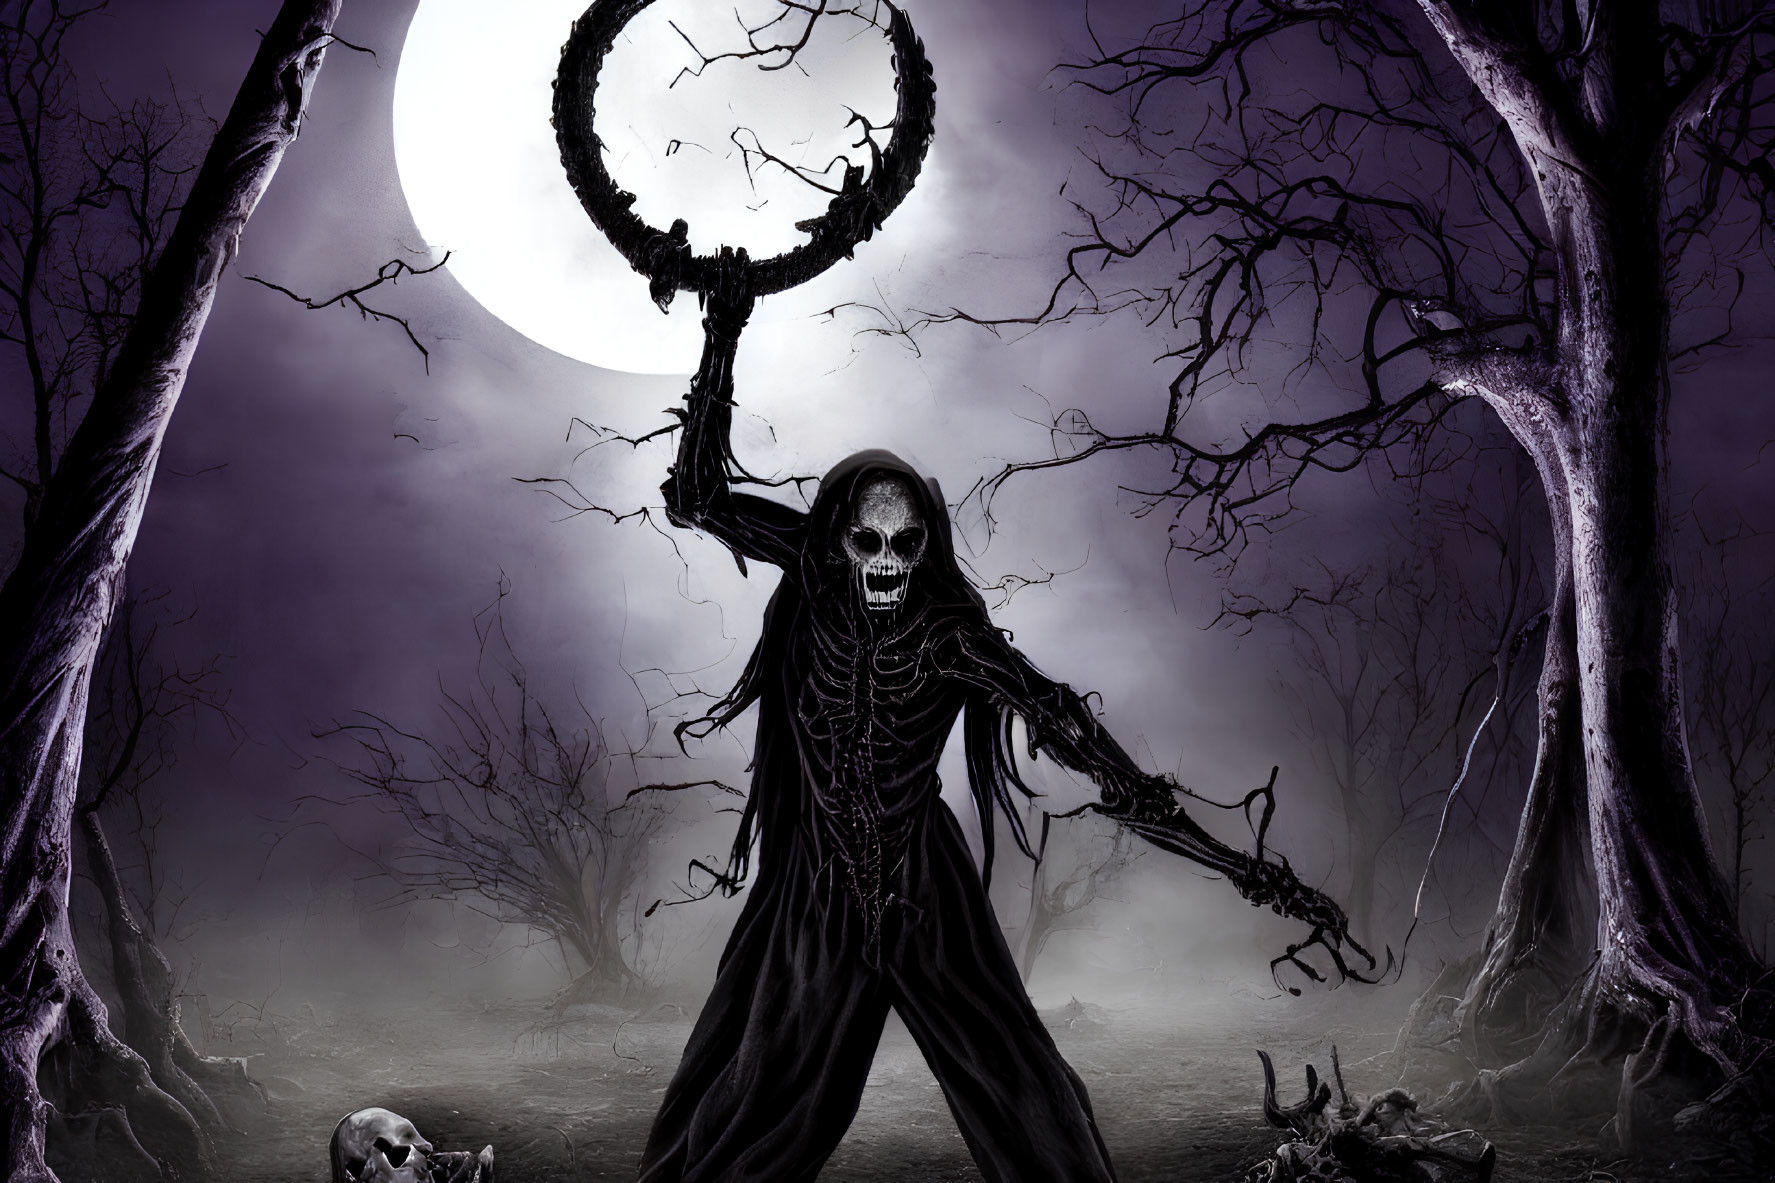 Skeletal figure in black robe with amulet under full moon